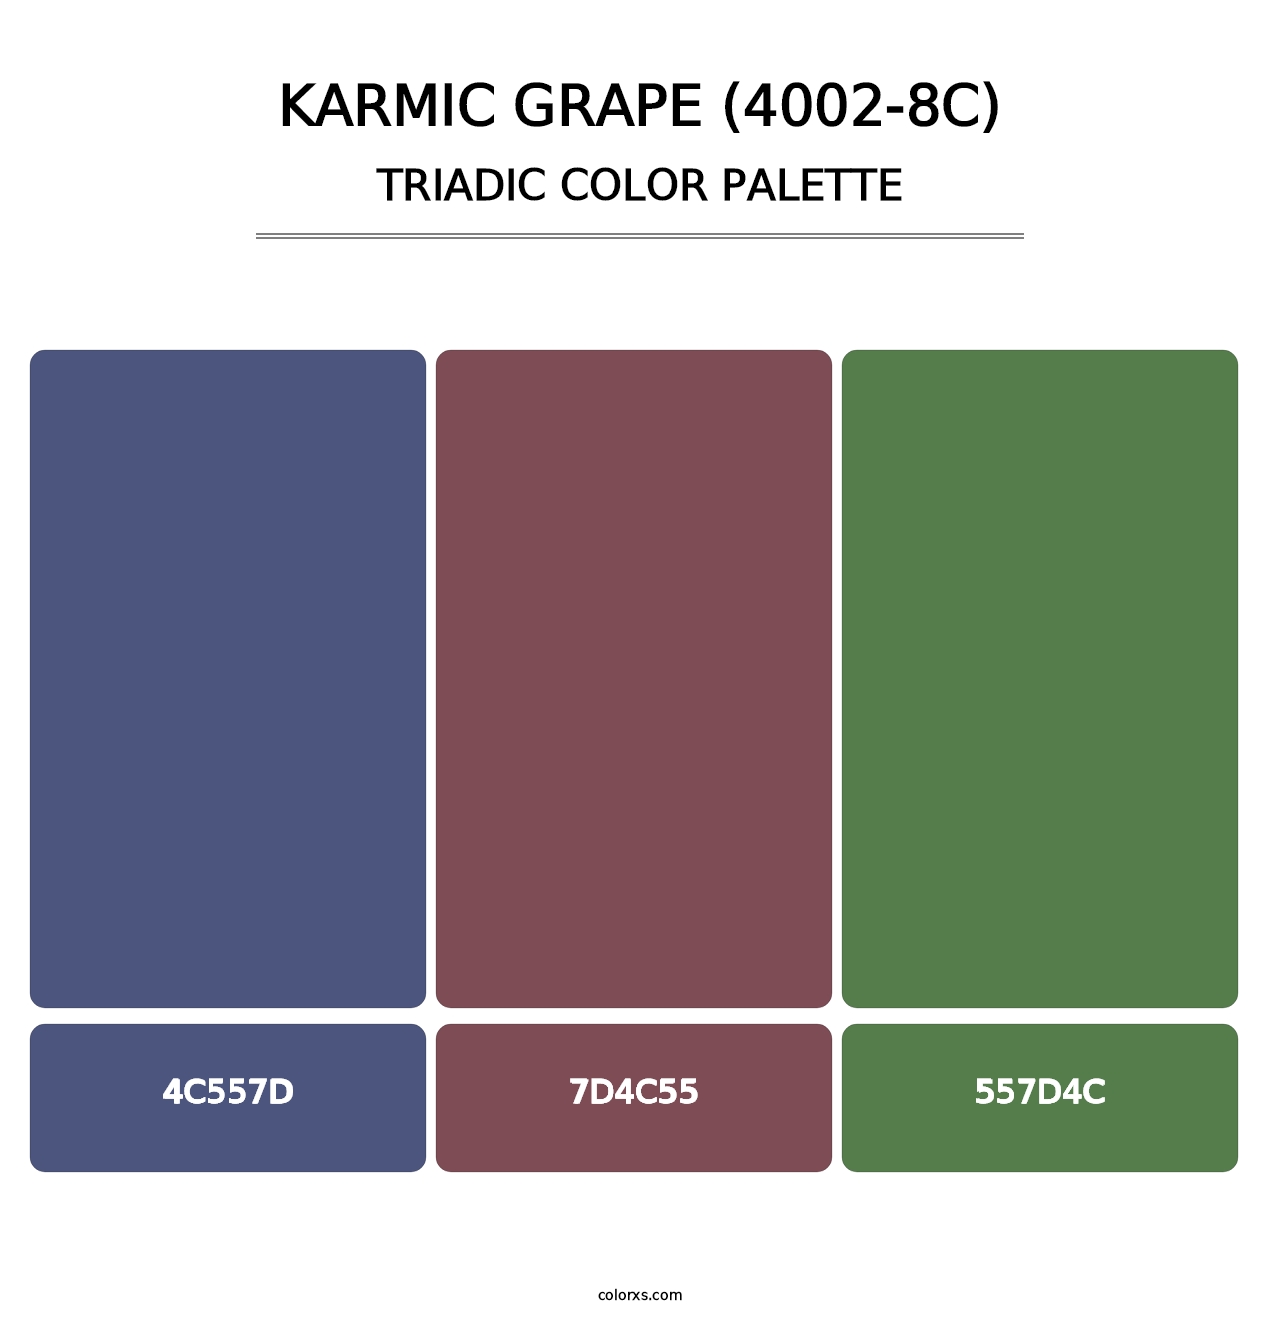 Karmic Grape (4002-8C) - Triadic Color Palette